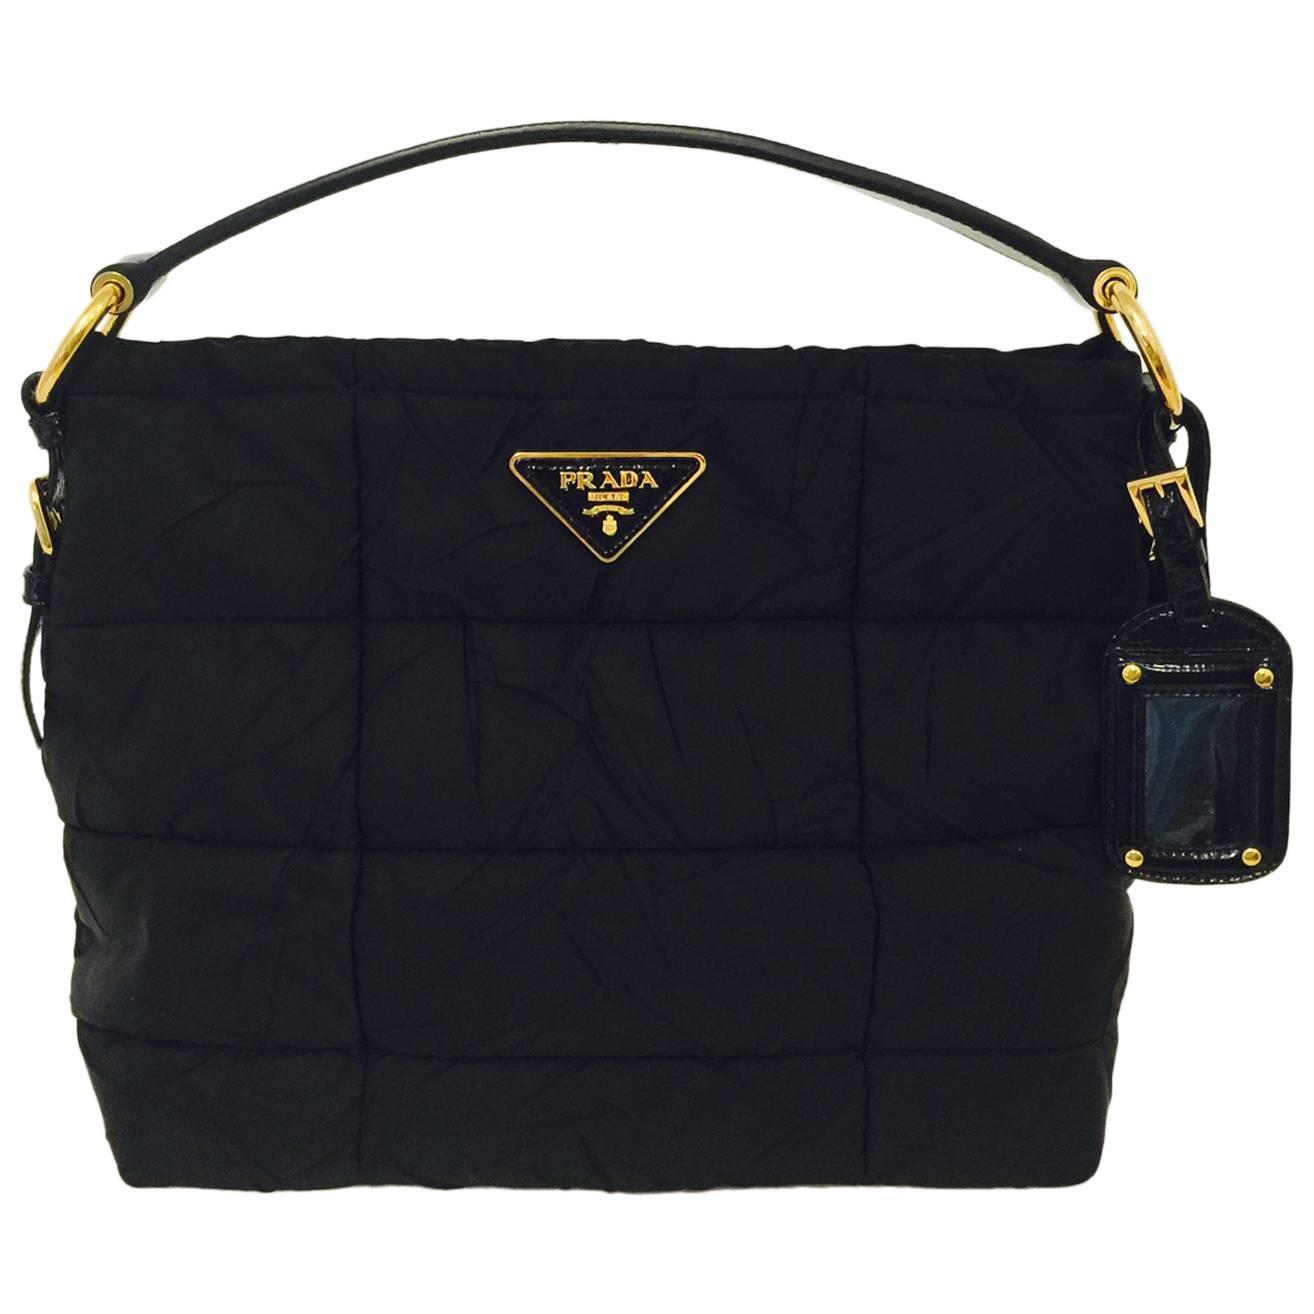 Vintage Prada Handbags and Purses - 113 For Sale at 1stdibs  